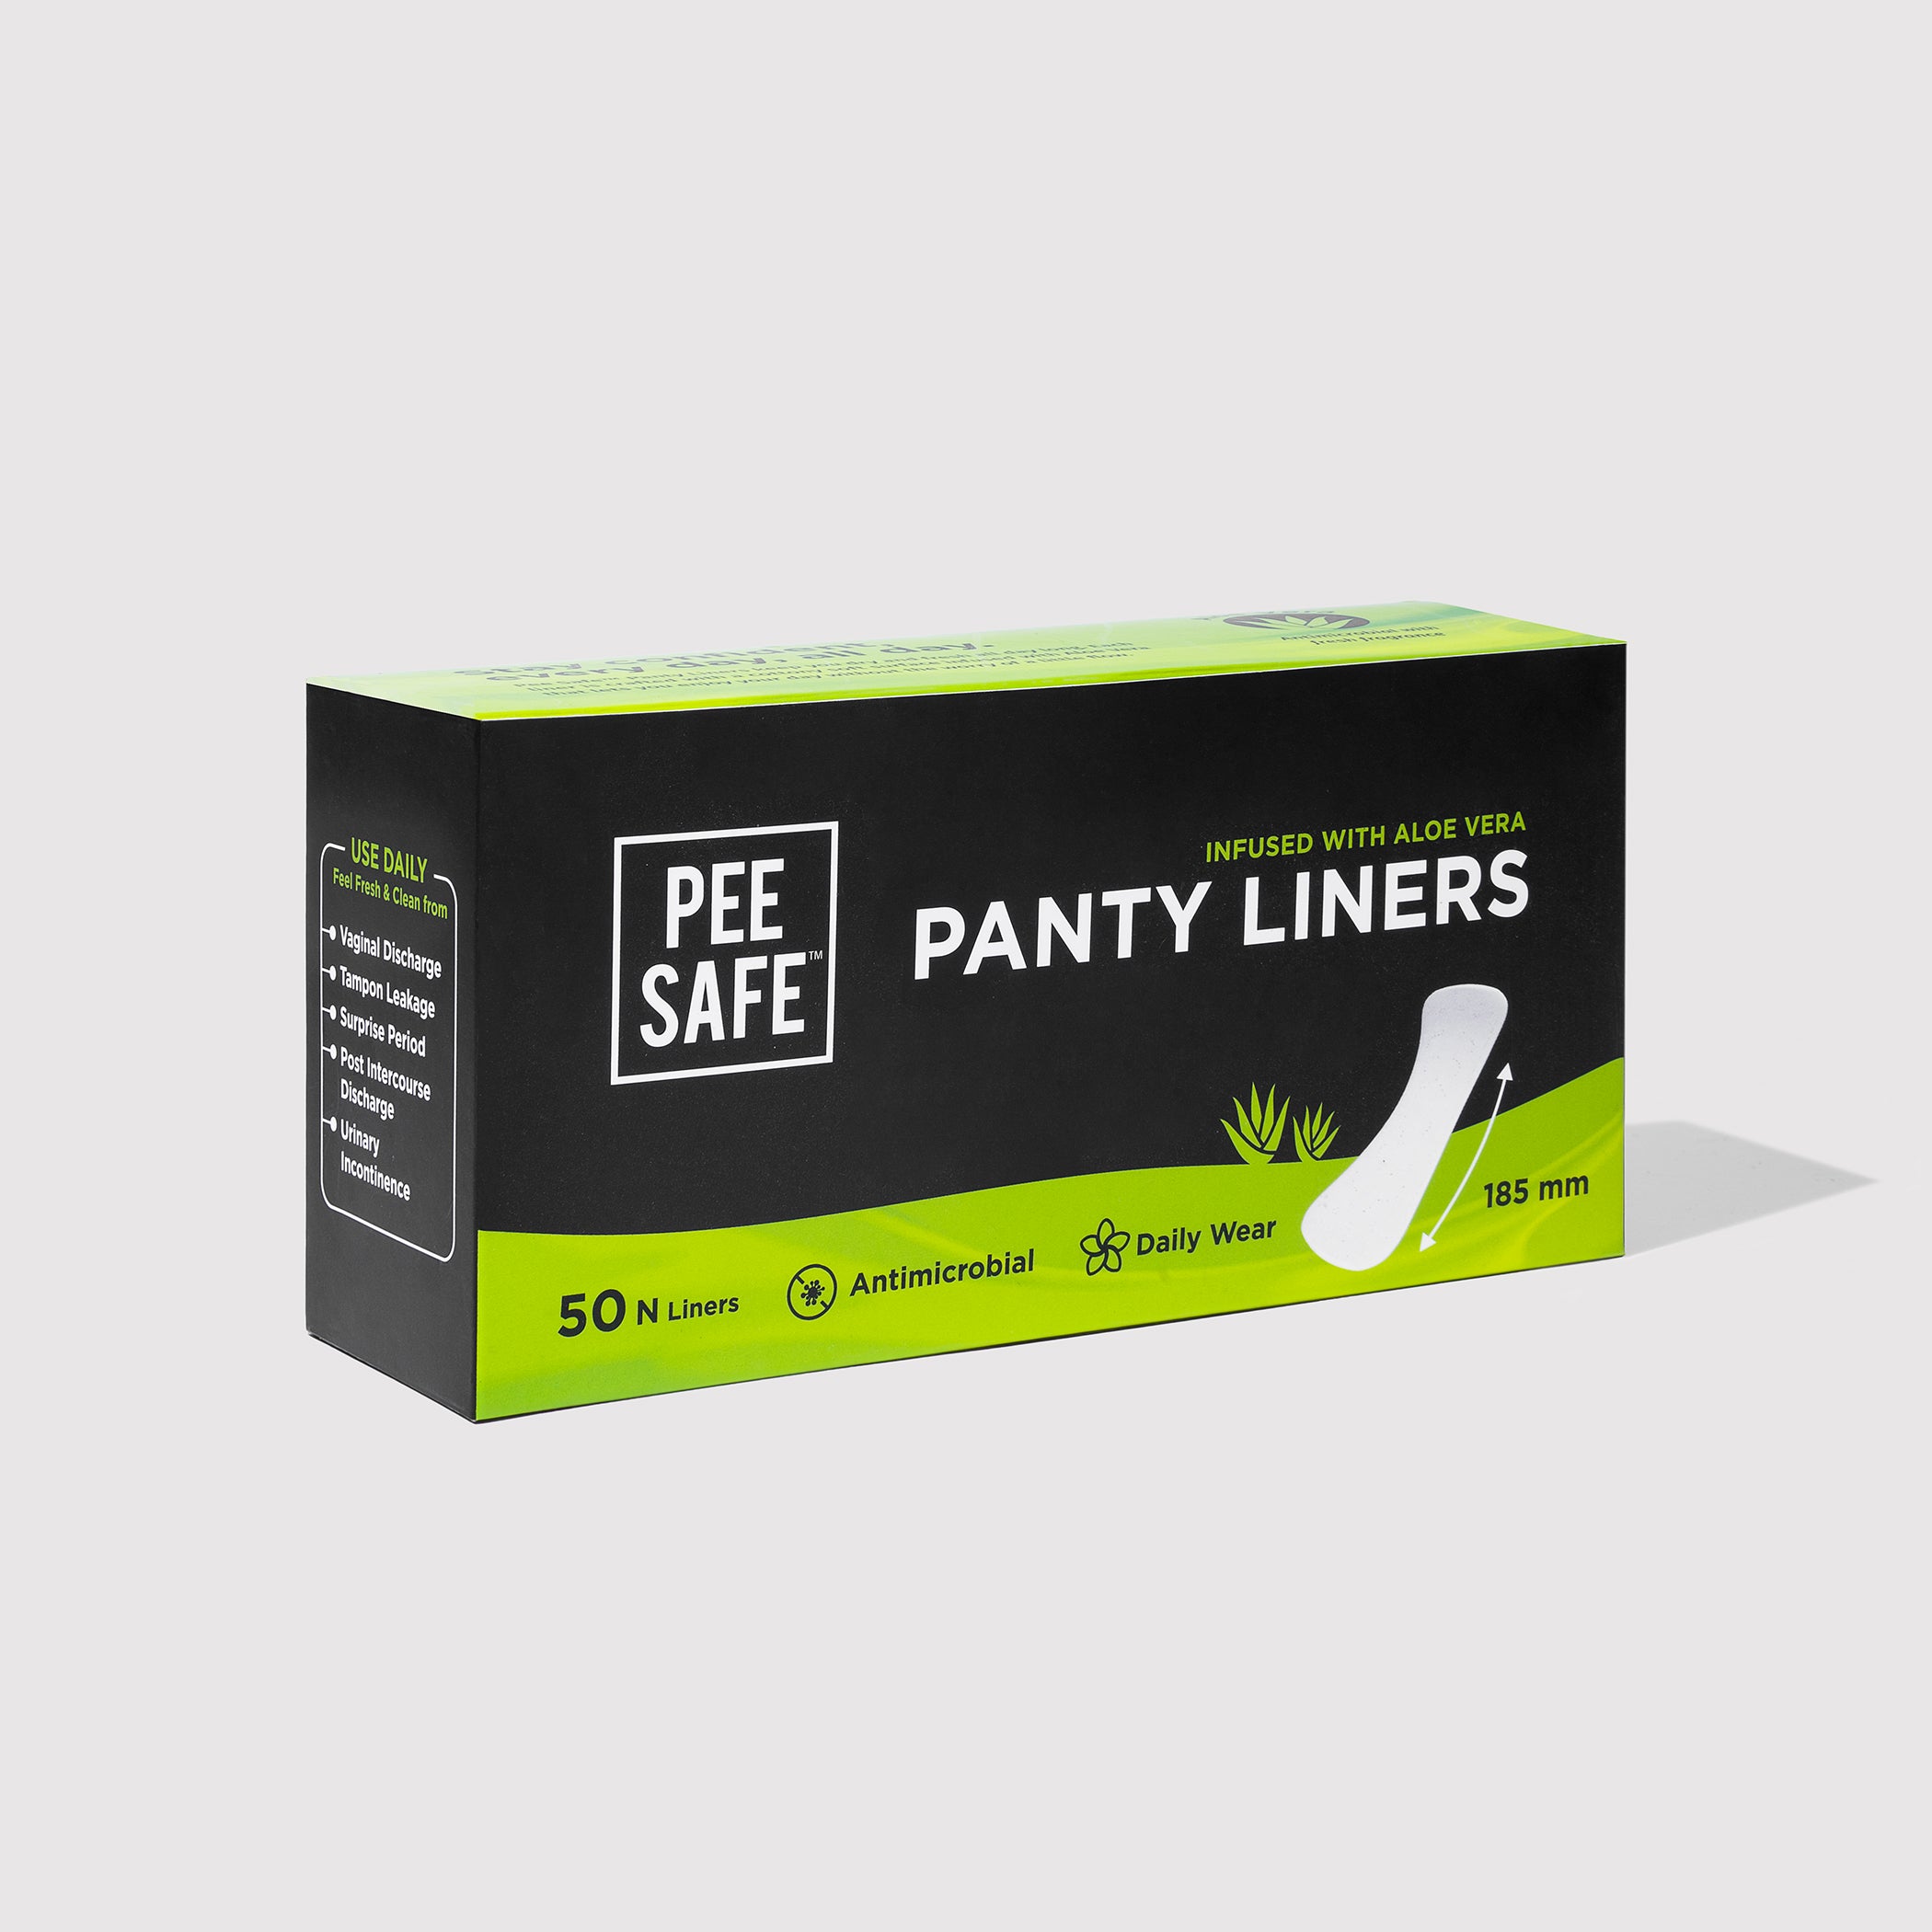 Pee Safe Aloe Vera Panty Liners (50 Liners) - BULK BUY